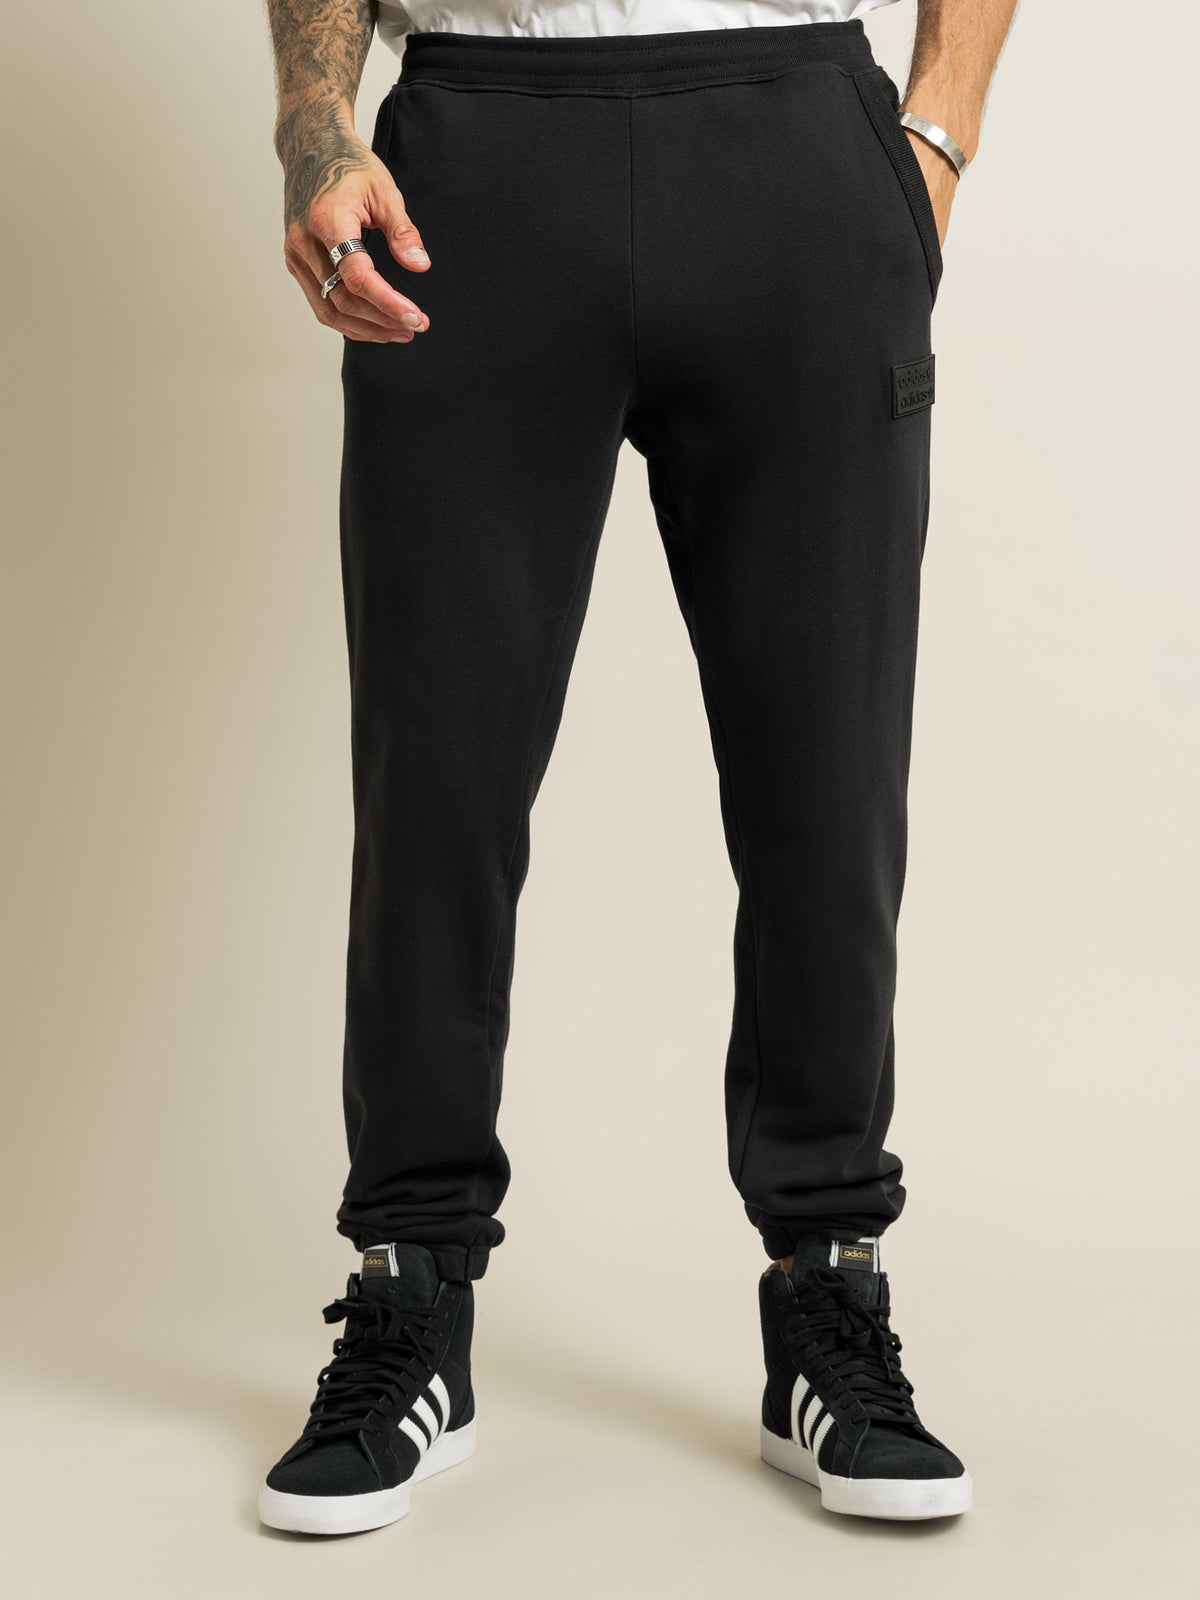 Silicone Sweatpants in Black